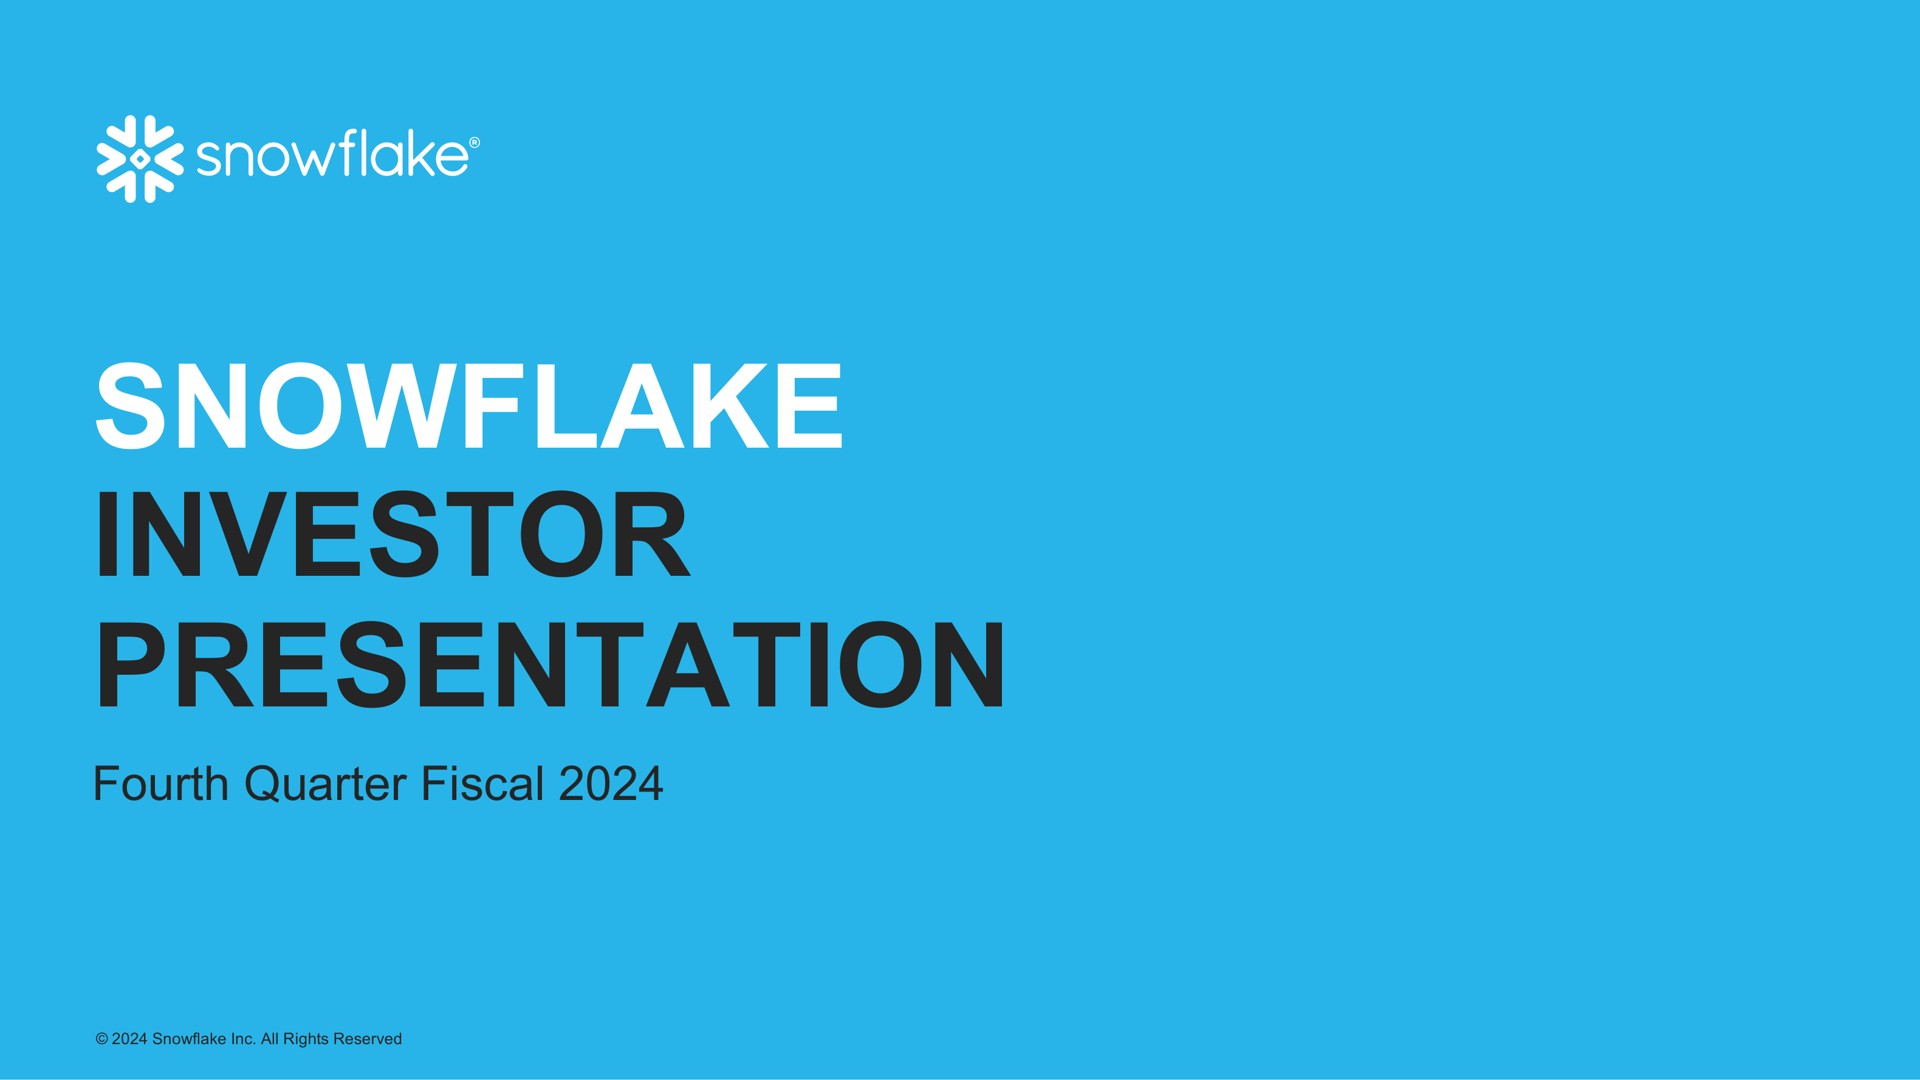 snowflake investor presentation | Snowflake